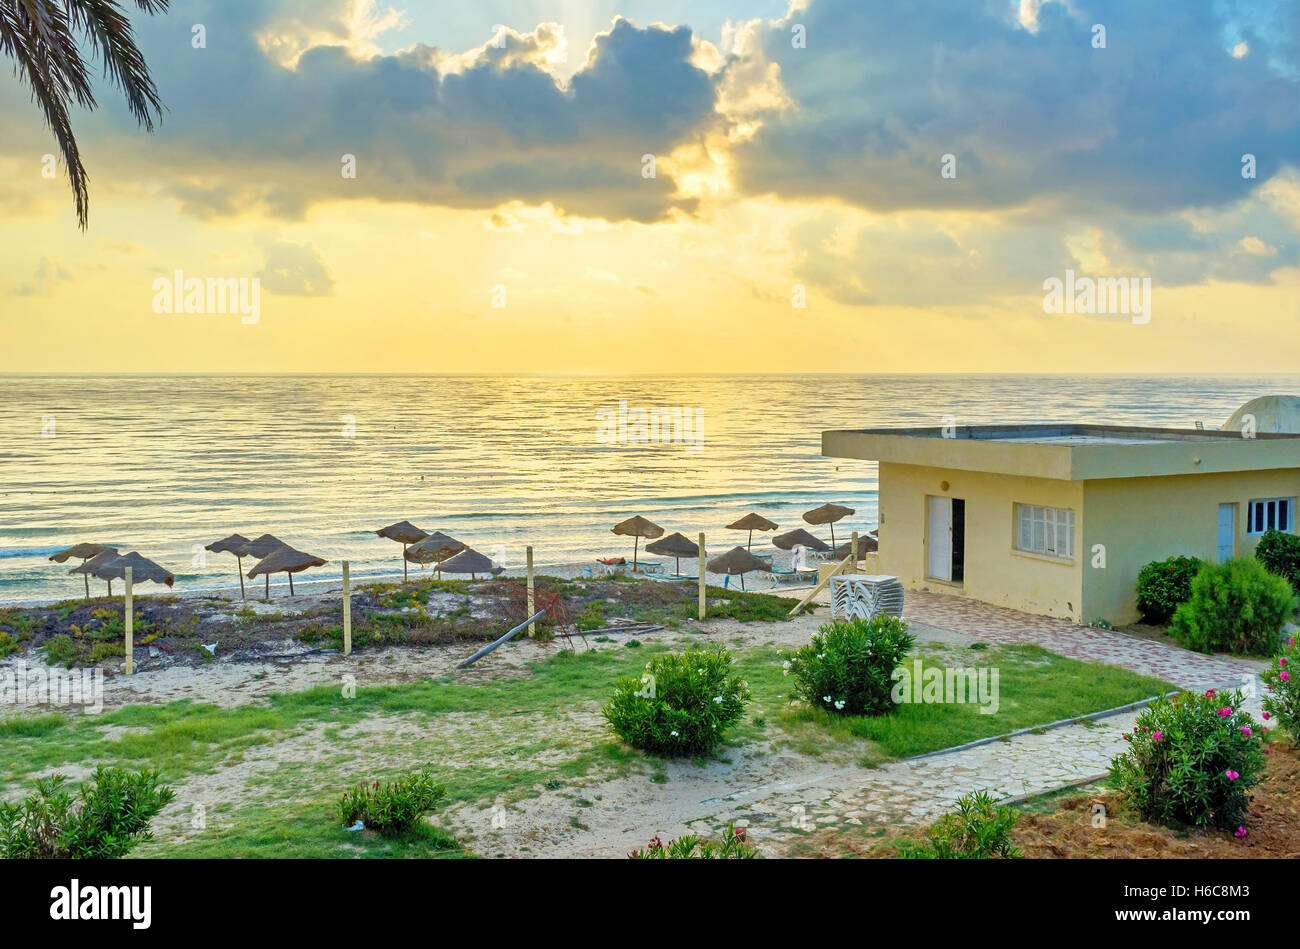 The colorful sunrise over the Mediterranean sea in resort of El Kantaoui, Tunisia. Stock Photo